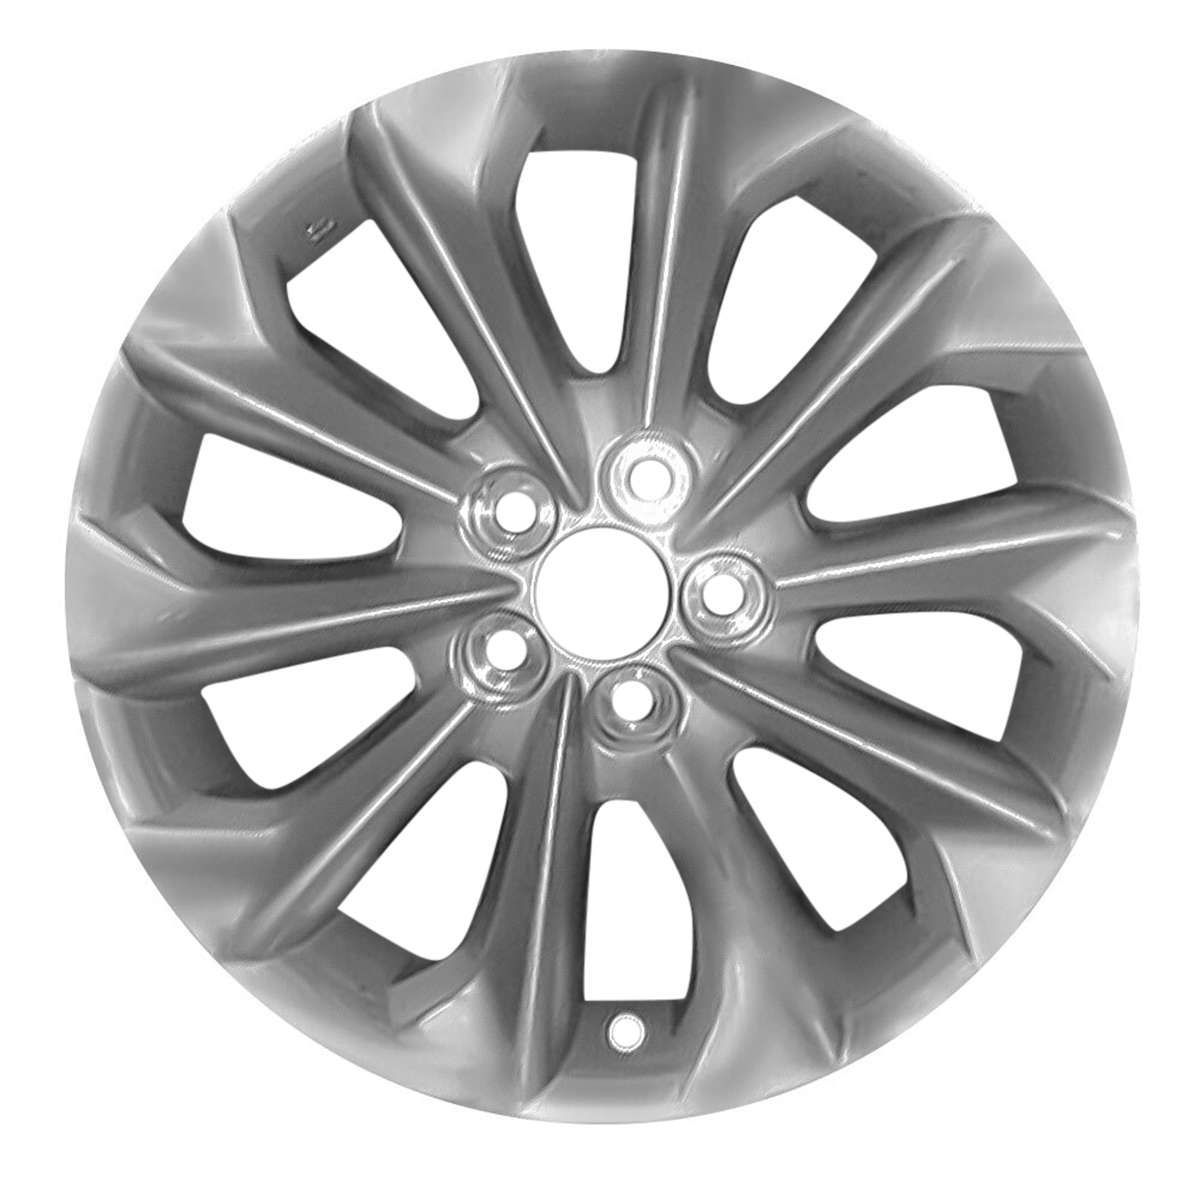 2020 Toyota Corolla New 16" Replacement Wheel Rim RW75252S